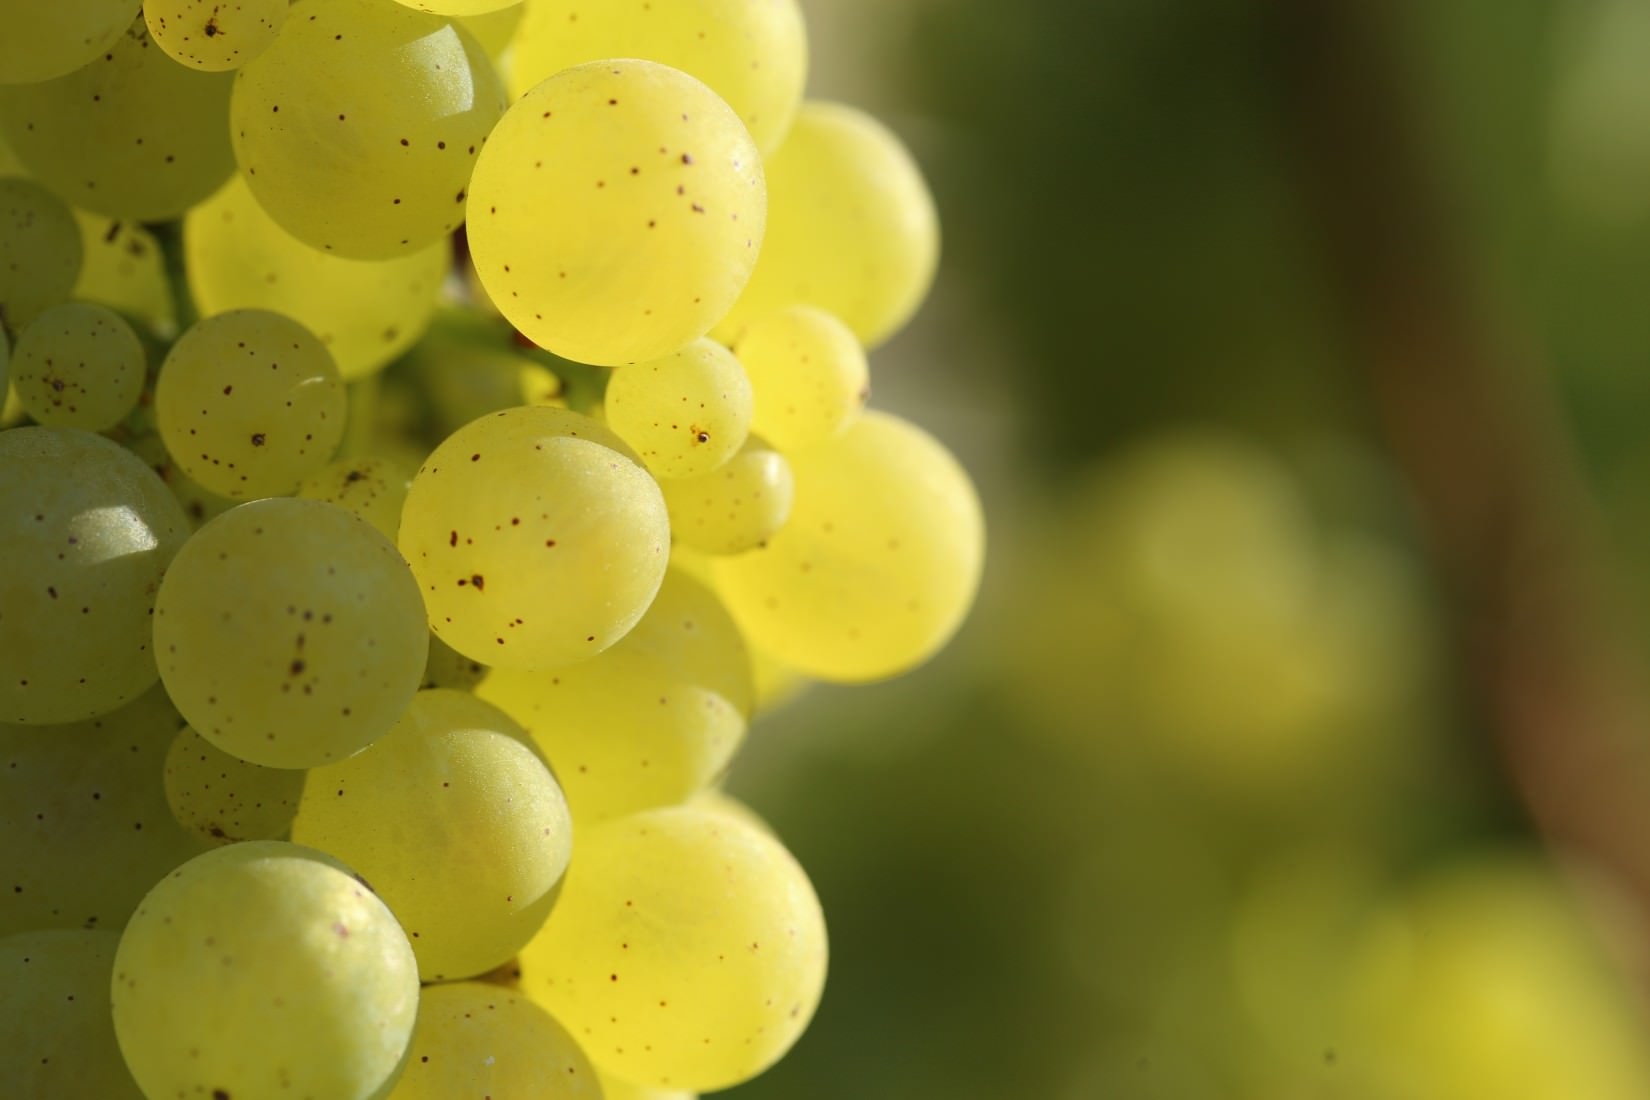 Jordan Russian River Valley Chardonnay grapes